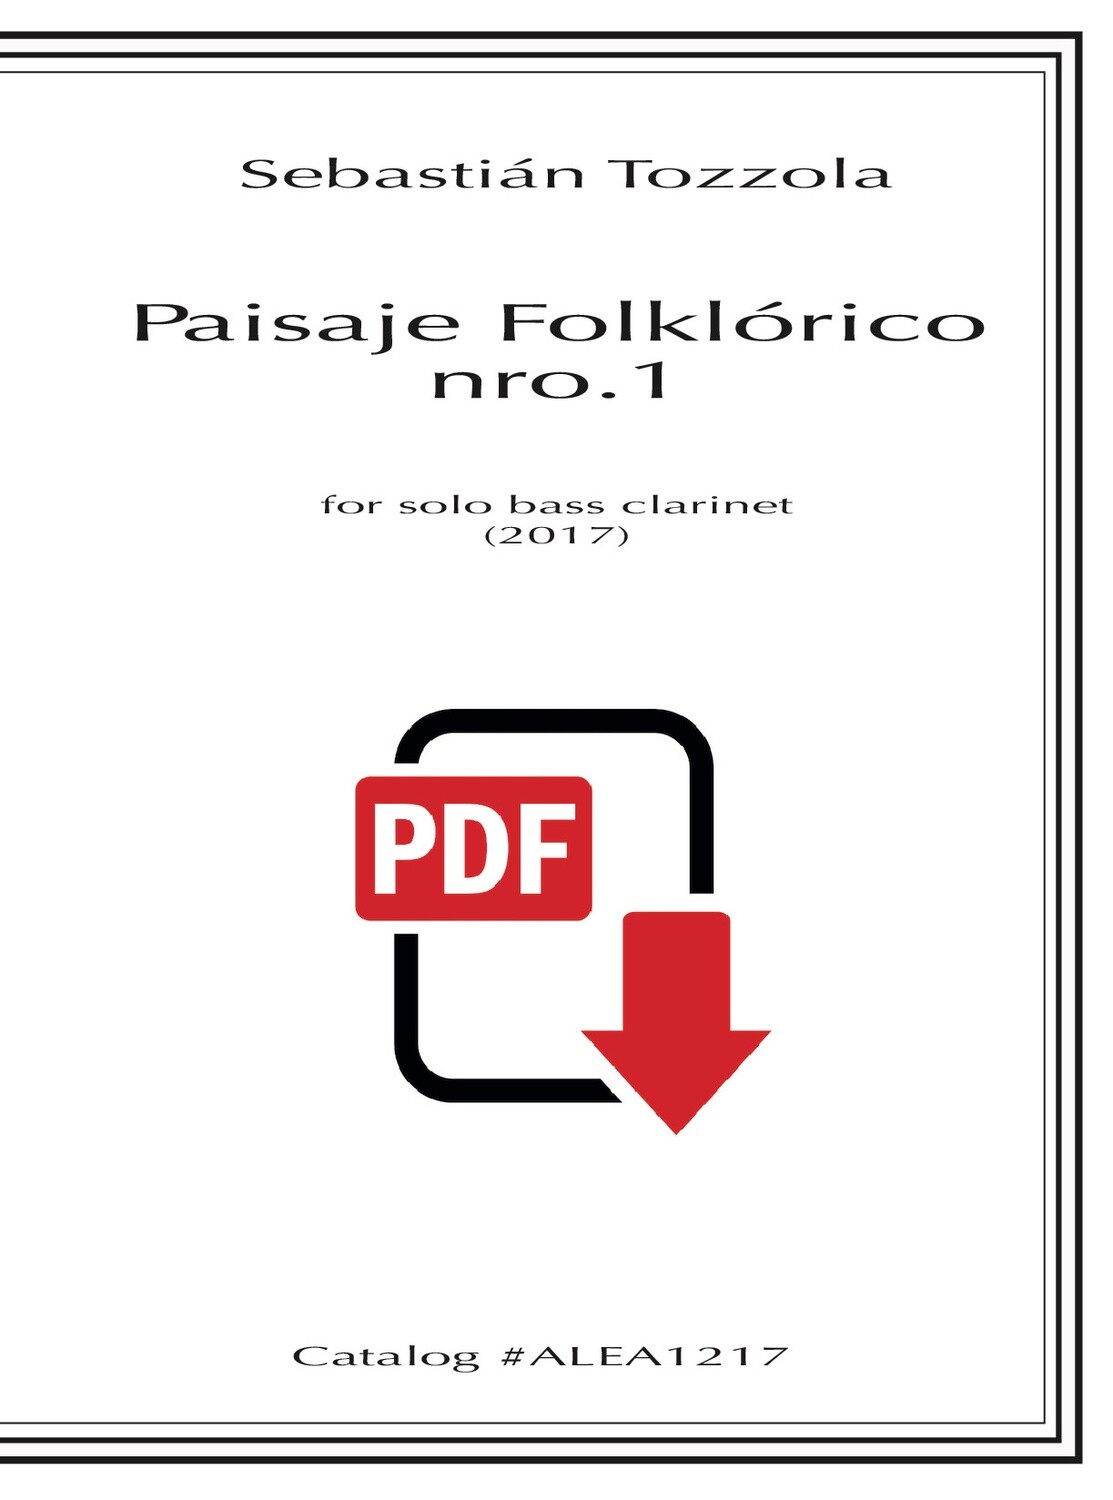 Tozzola: Paisaje Folklorico nro.1 (PDF)